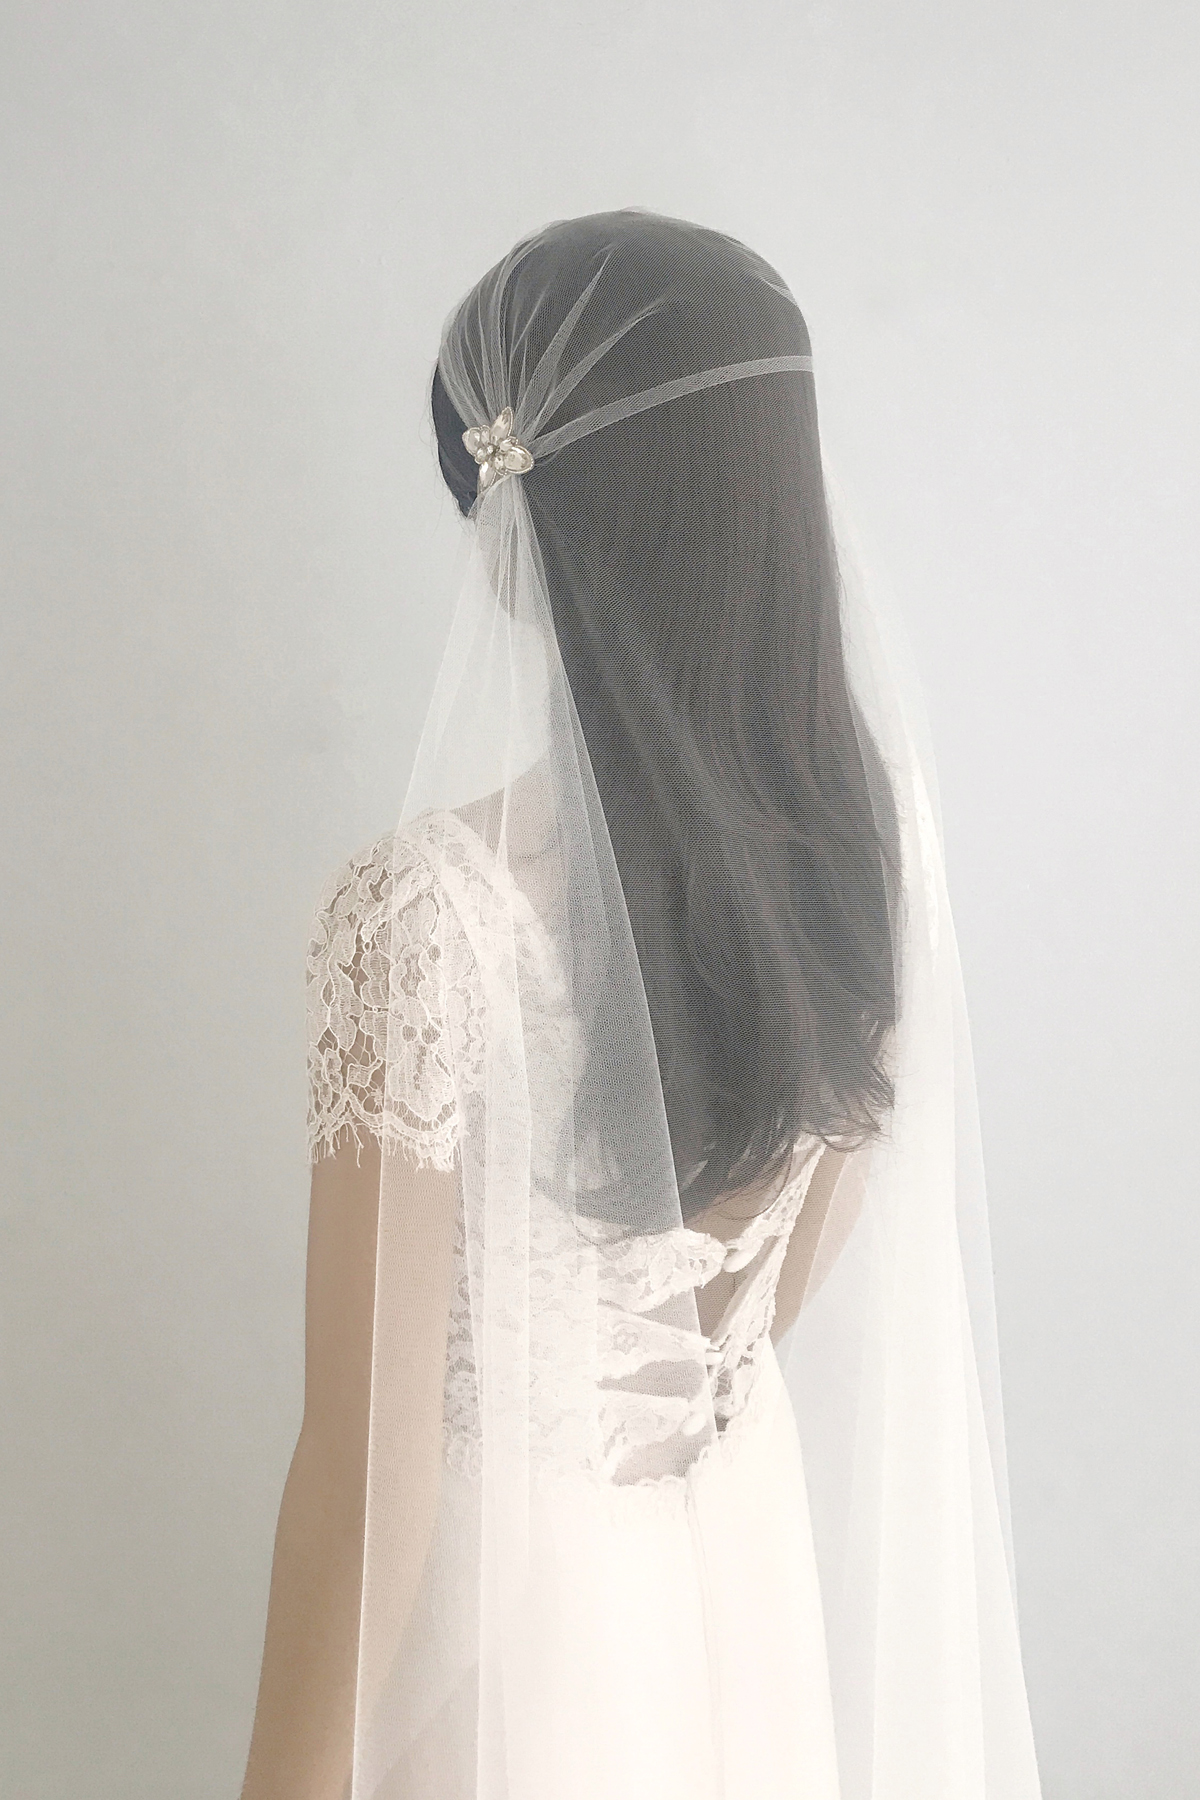 Juliet cap wedding veil with embellishment 1